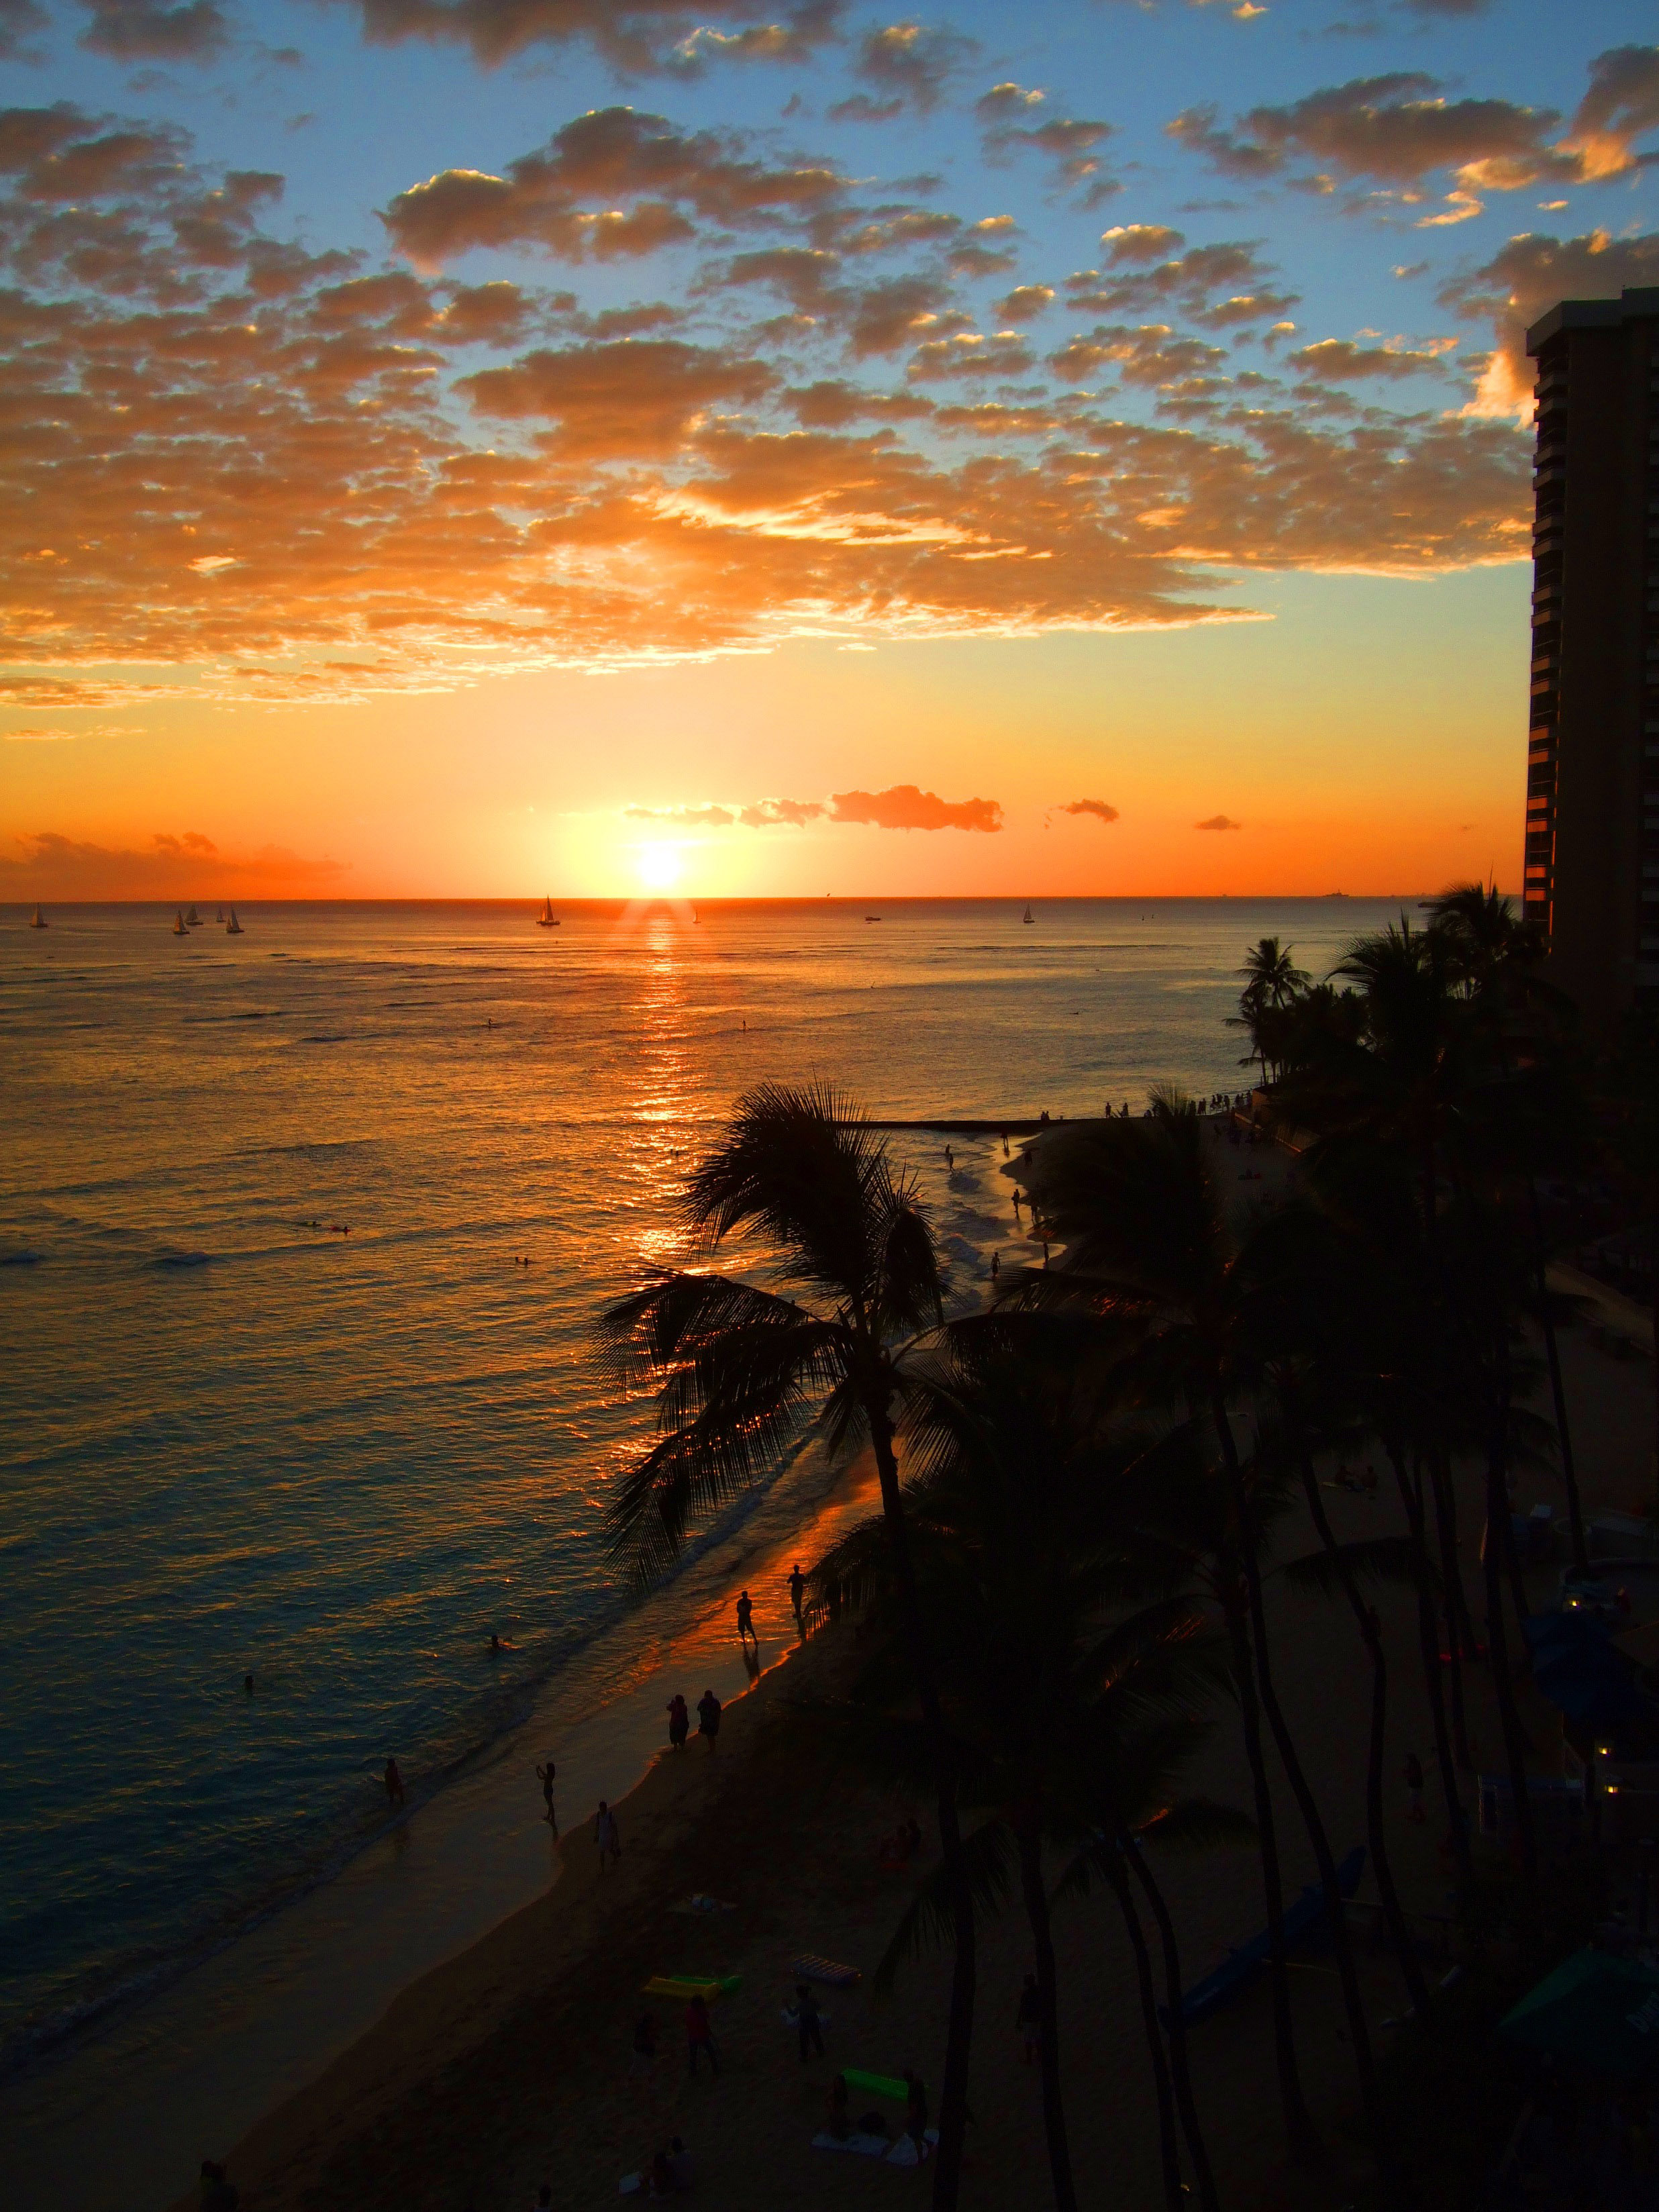 Sunset On Waikiki Beach In Honolulu Hawaii Image Free Stock Photo